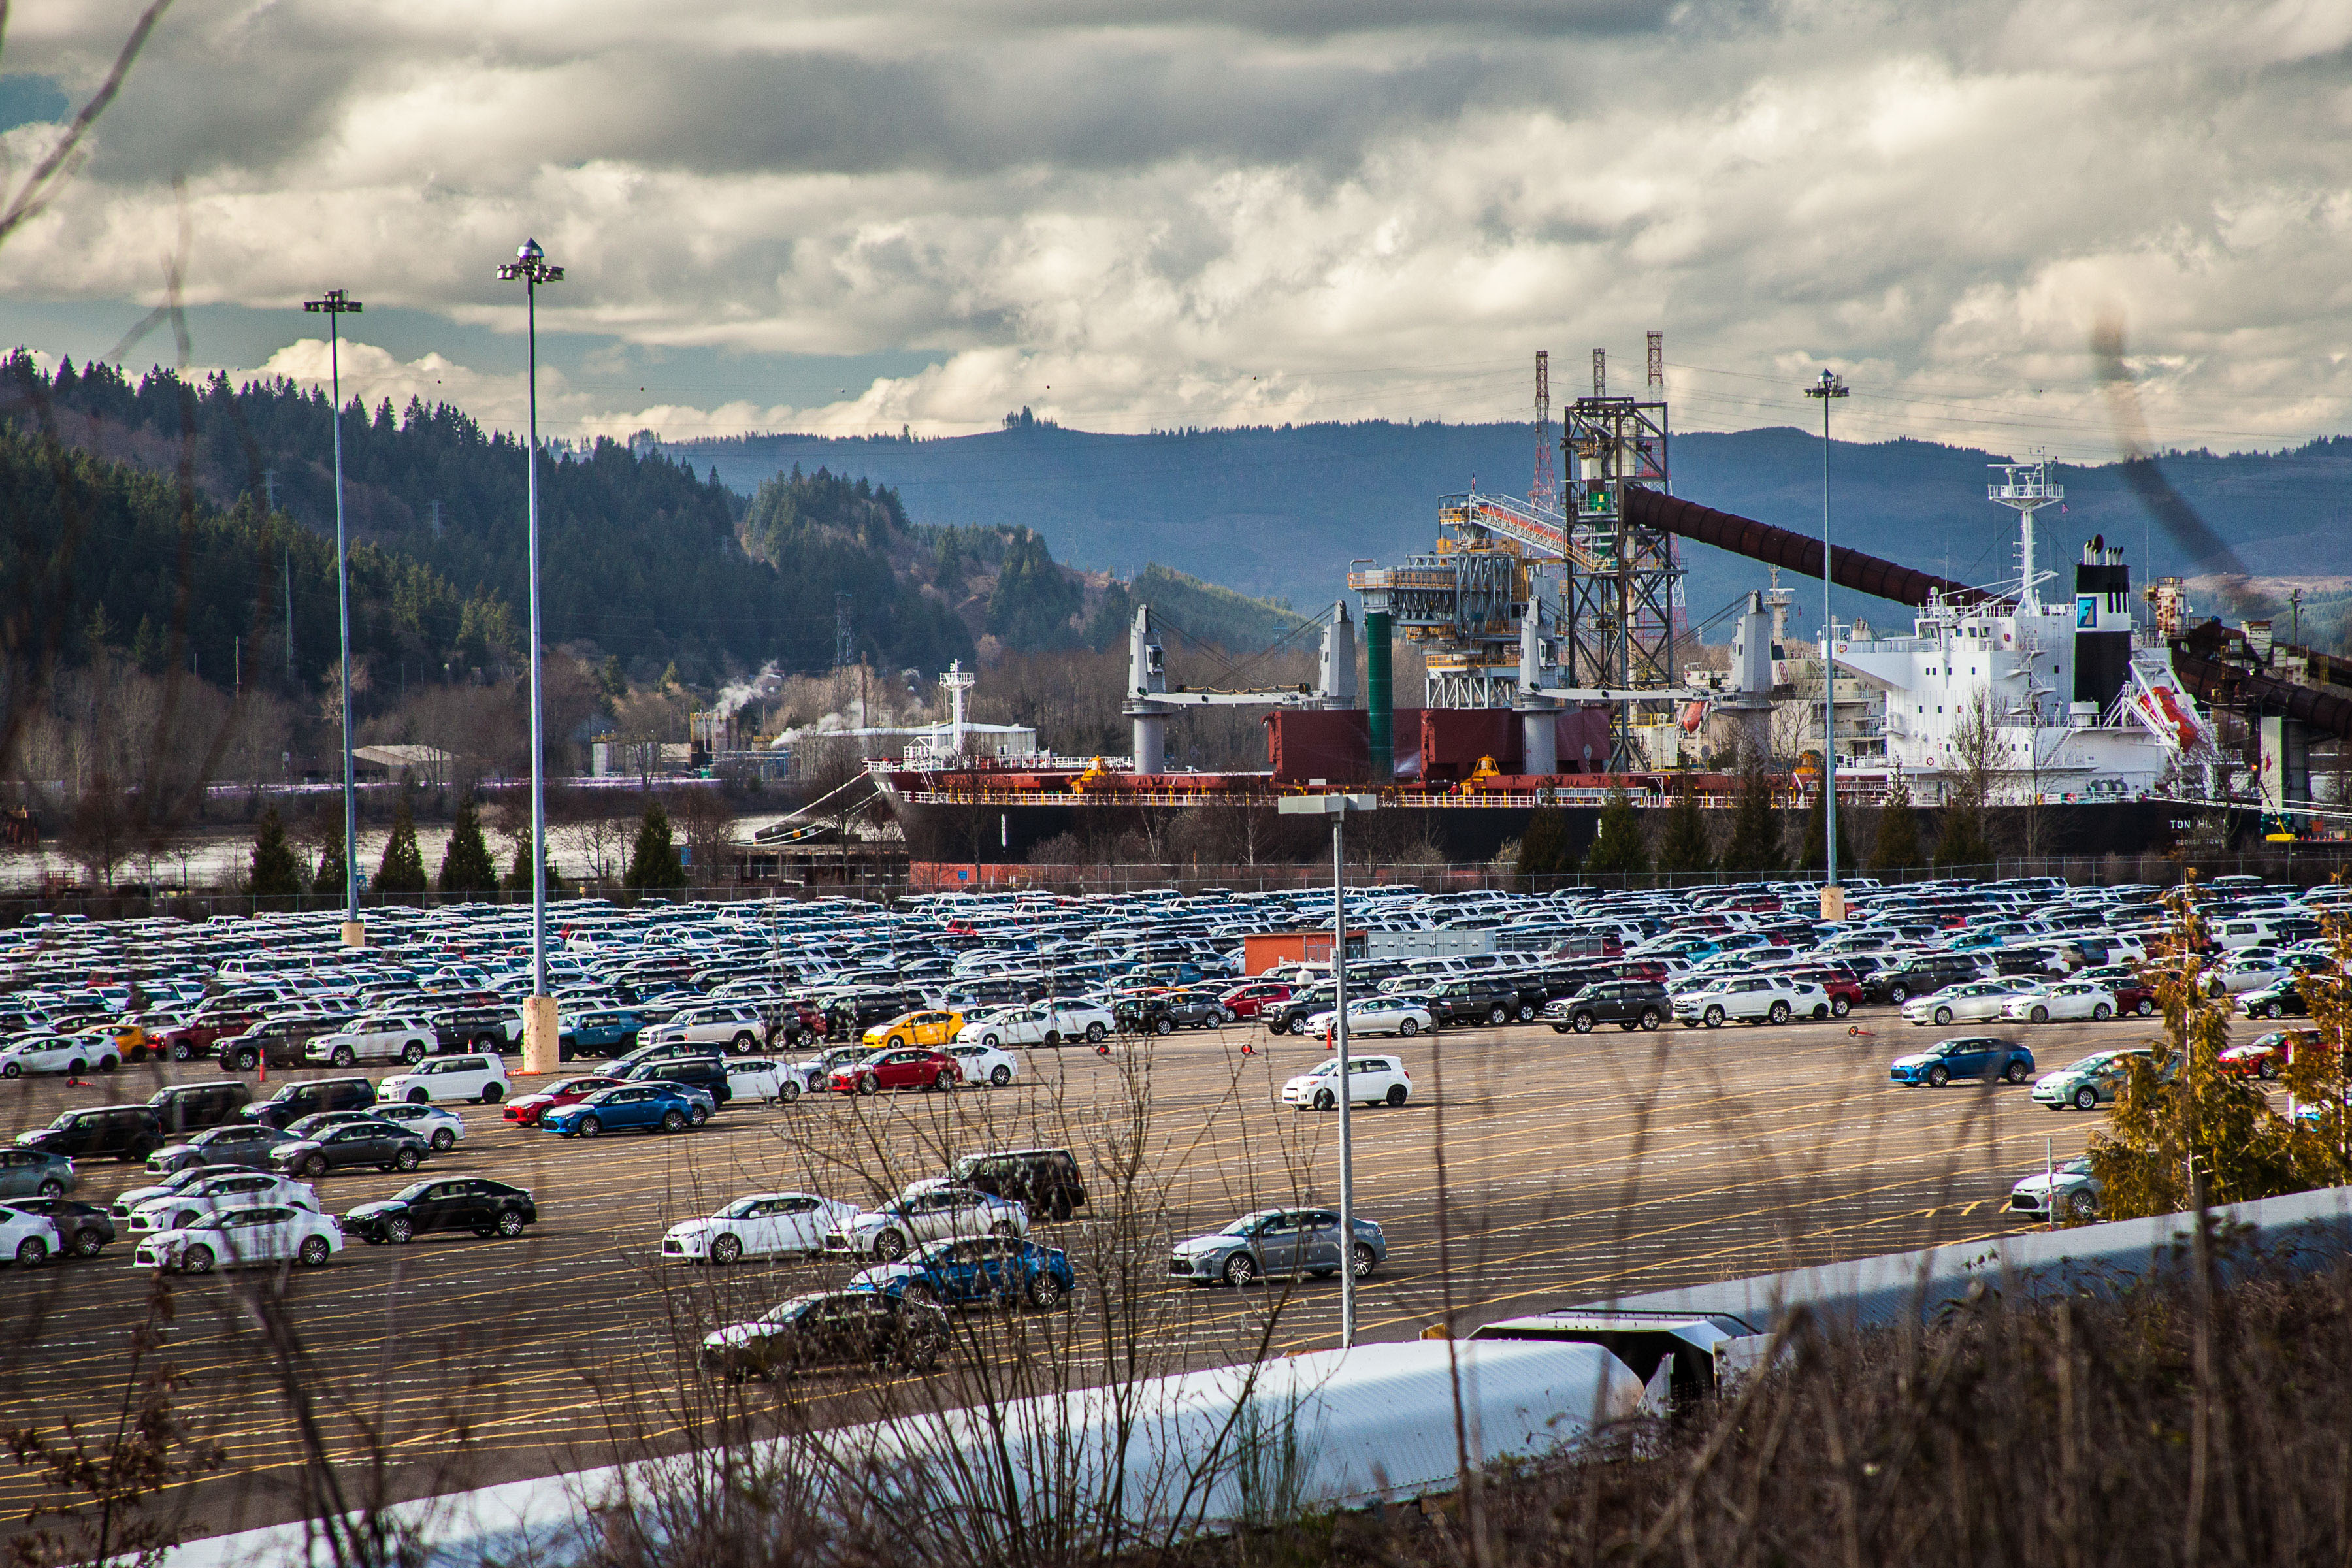 Parking lot cars unloaded at Terminal 4 Portland Oregon